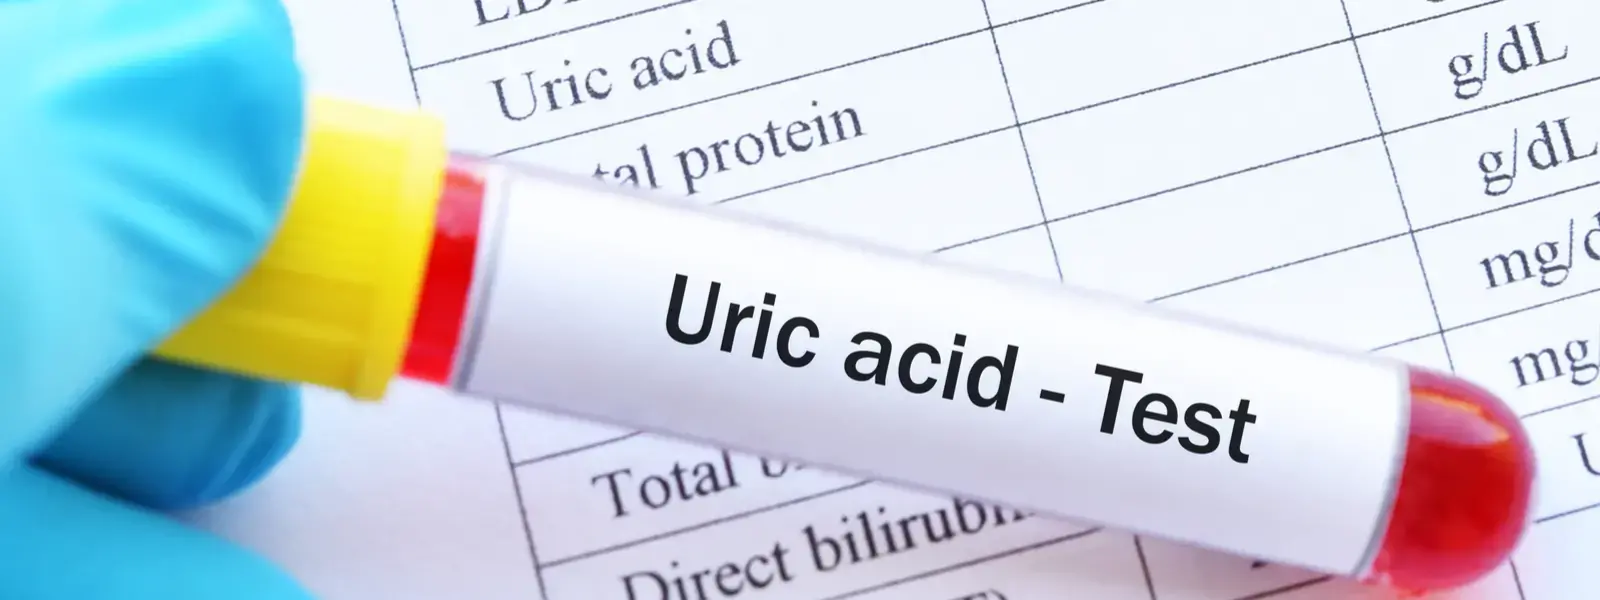 New study fails to establish correlation between Uric acid levels and Erectile dysfunction